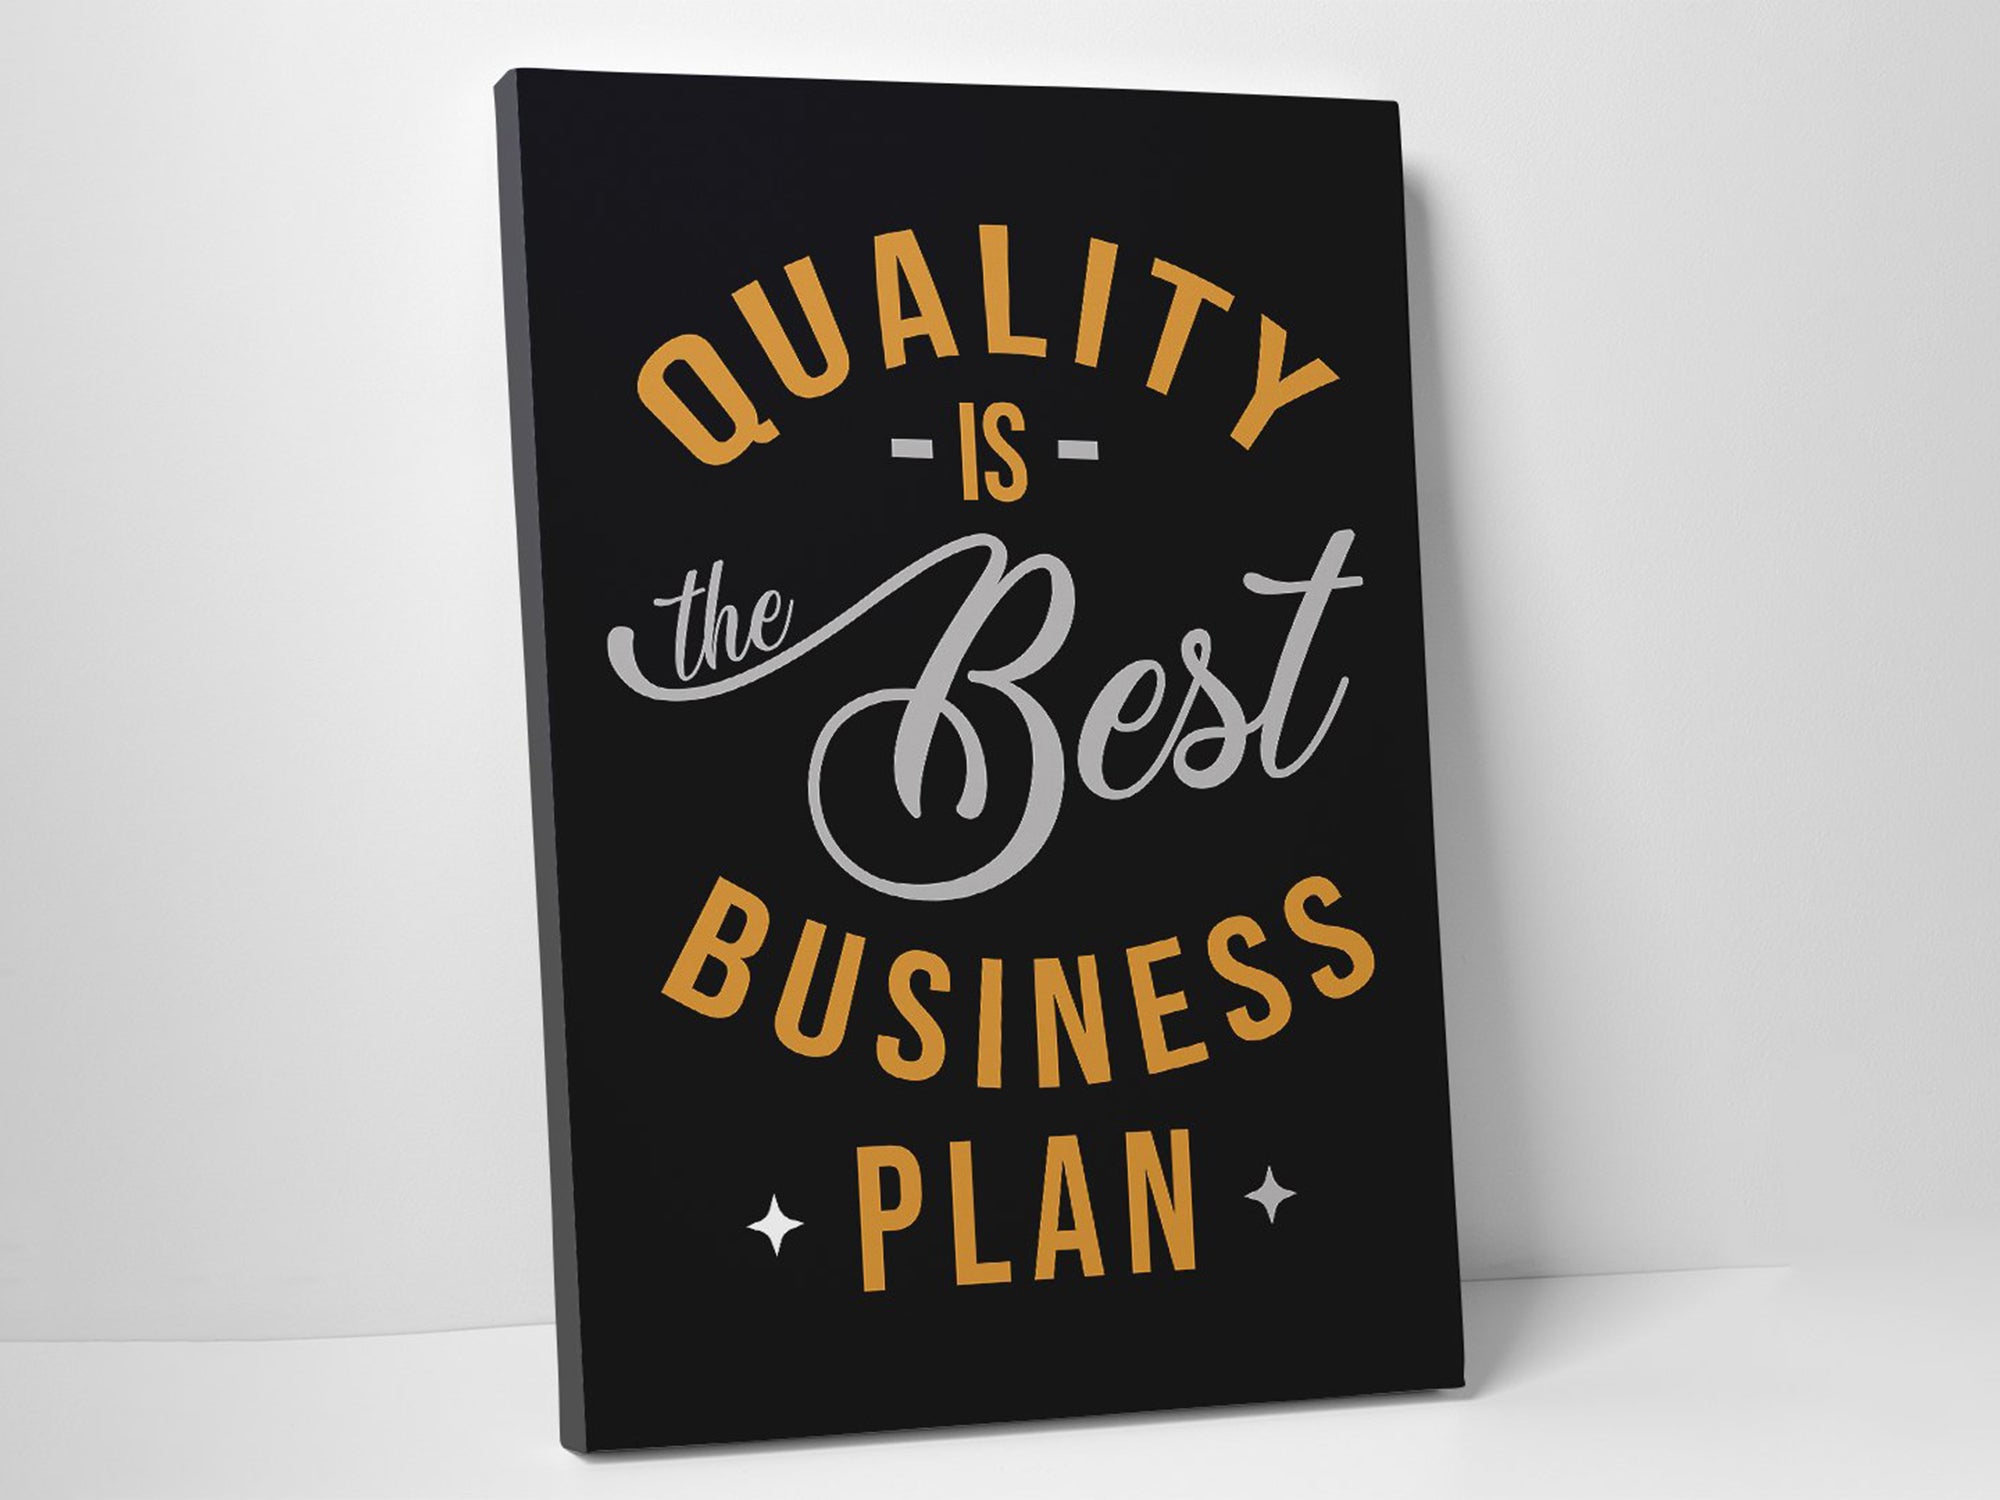 Quality the Best Business Plan - Inspiring - Canvas Wall Art